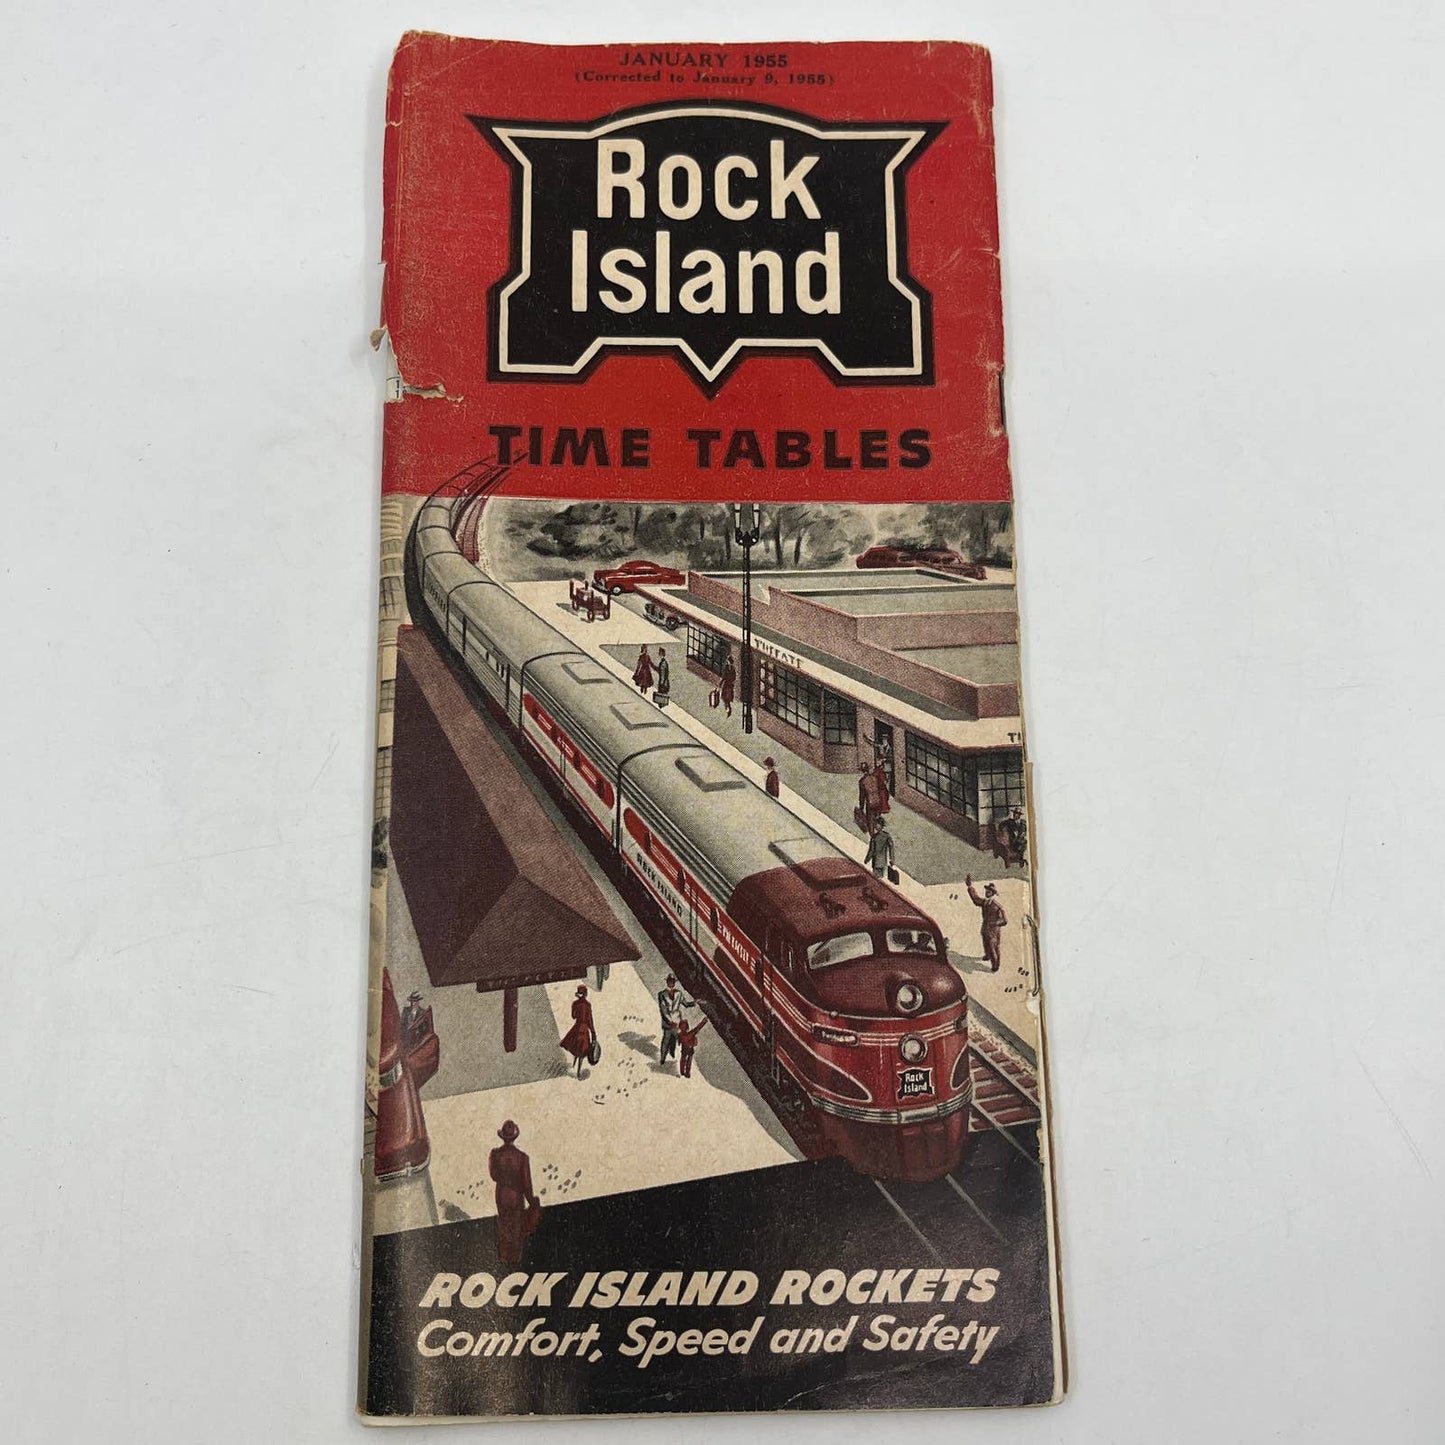 1955 Rock Island Railway Railroad Time Table Brochure "Rock Island Rockets" TG6